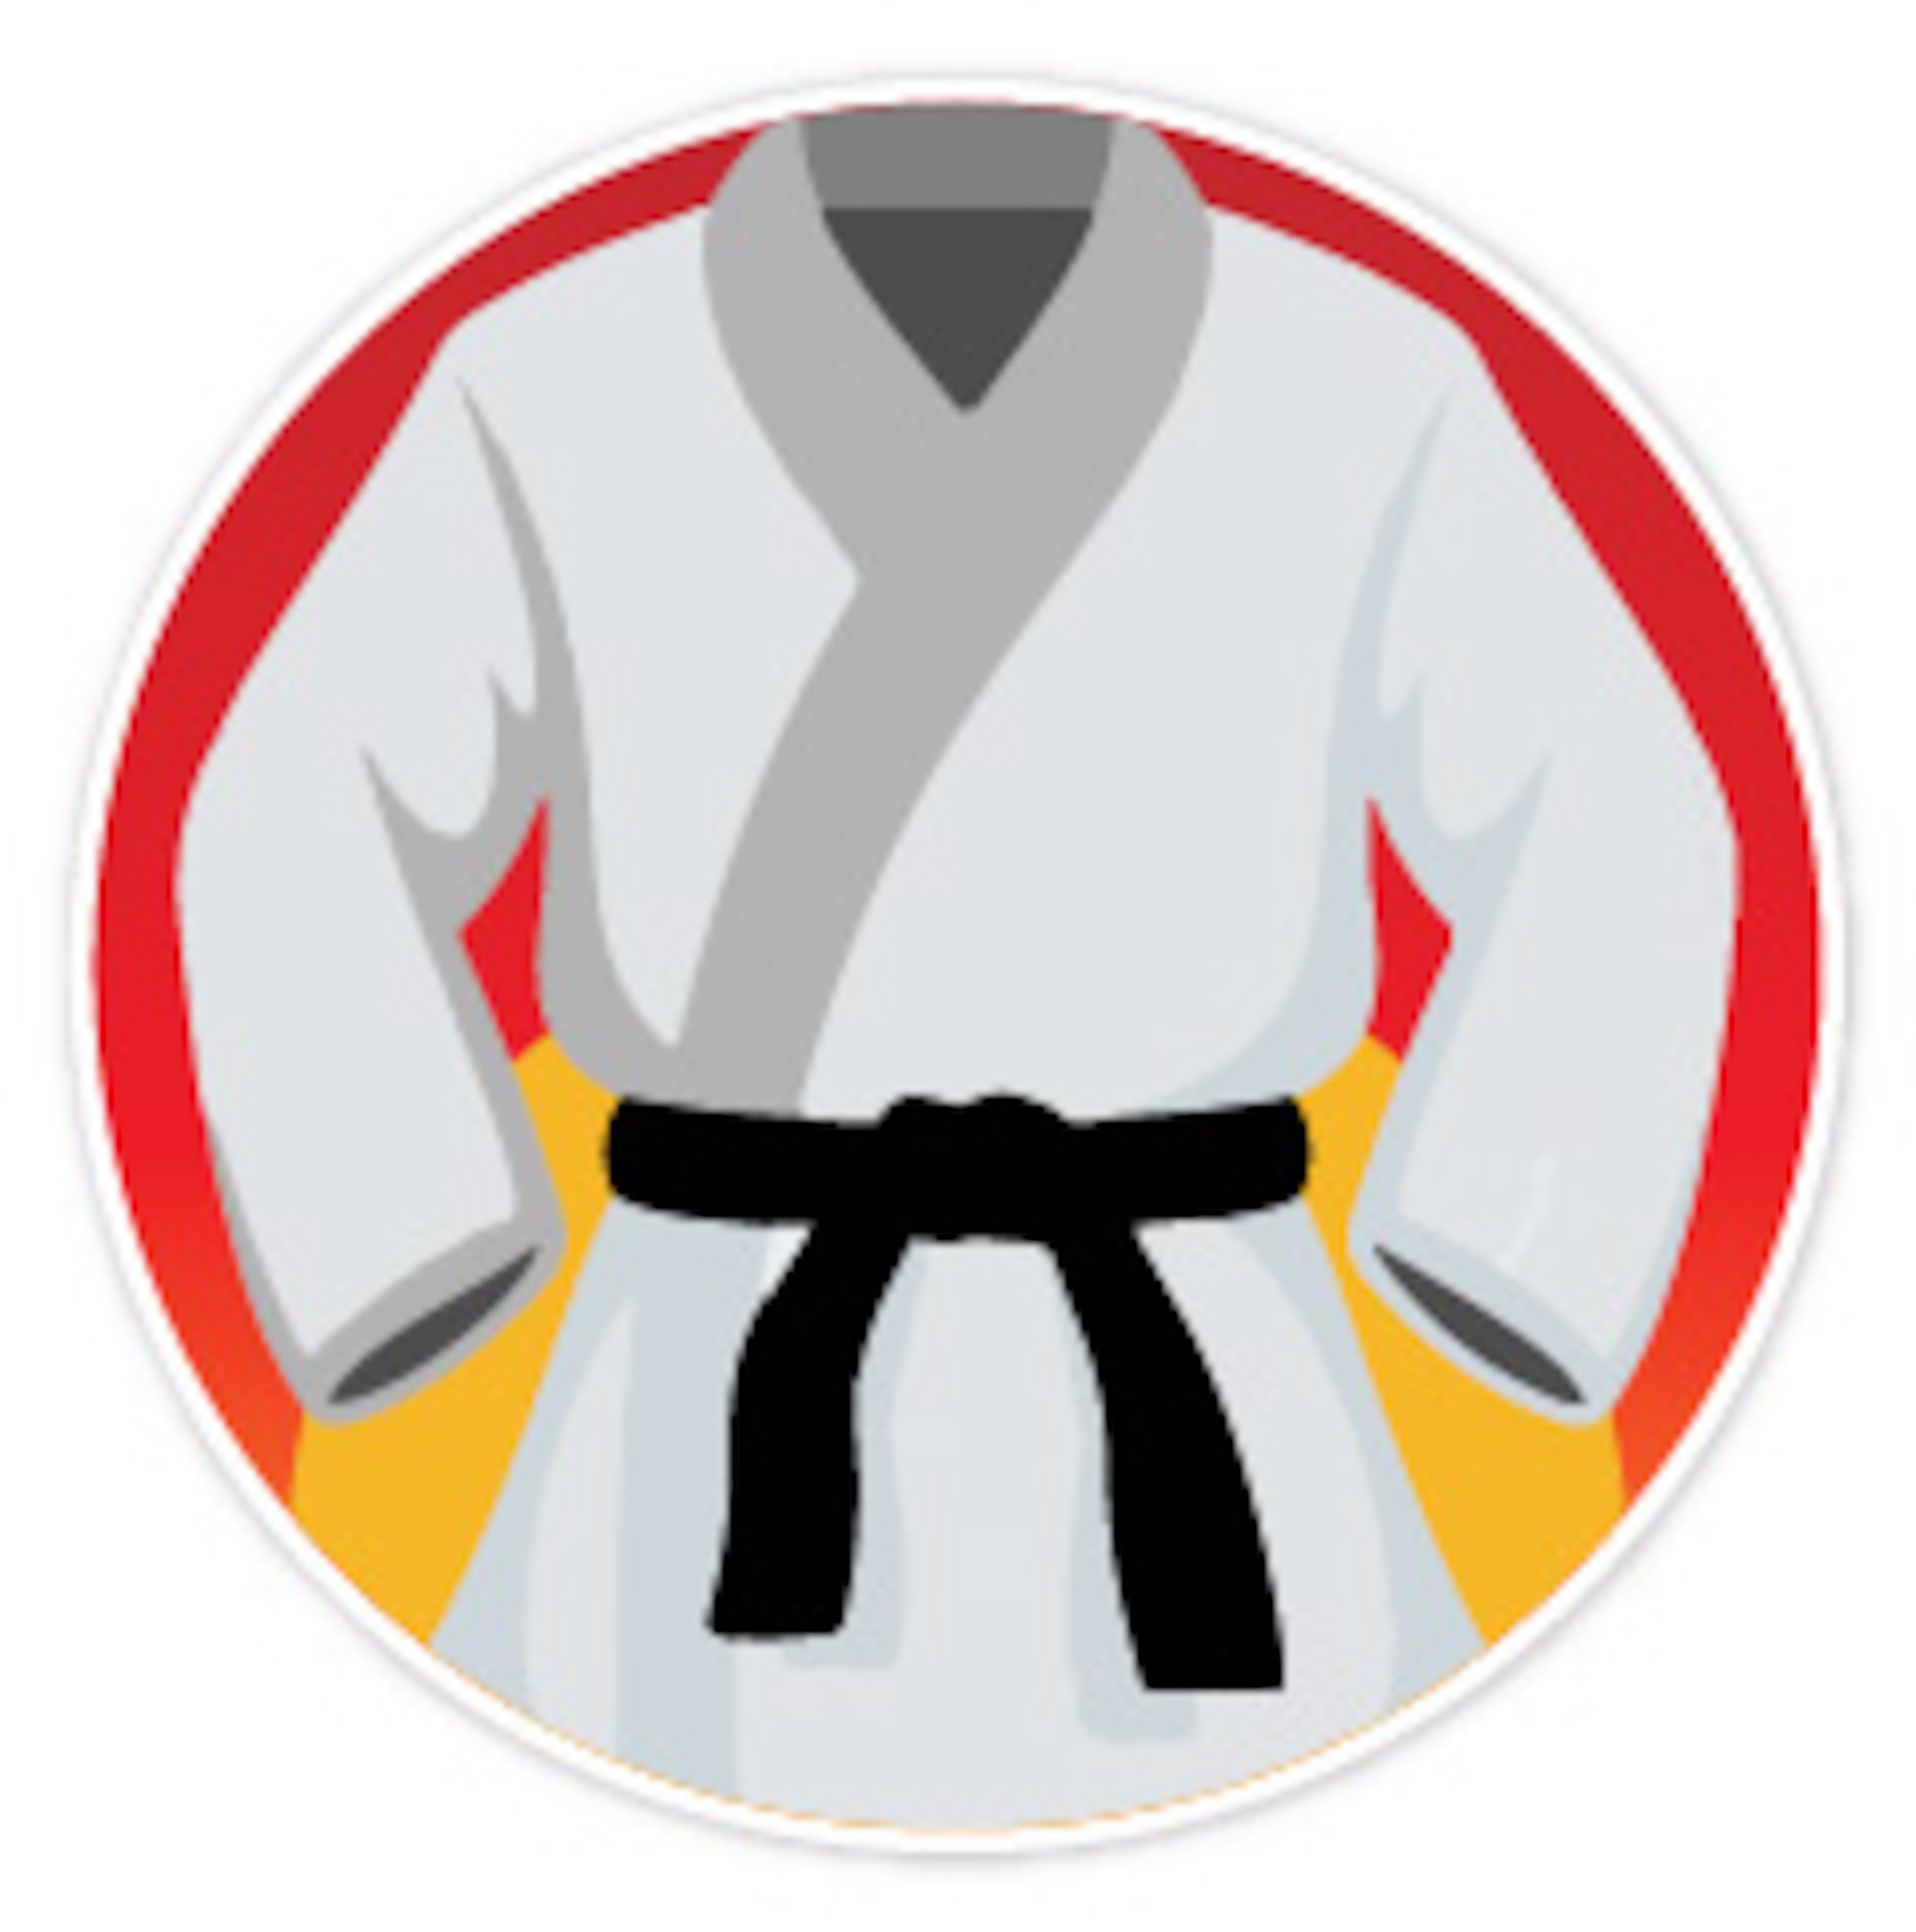 Karate uniform with a black belt